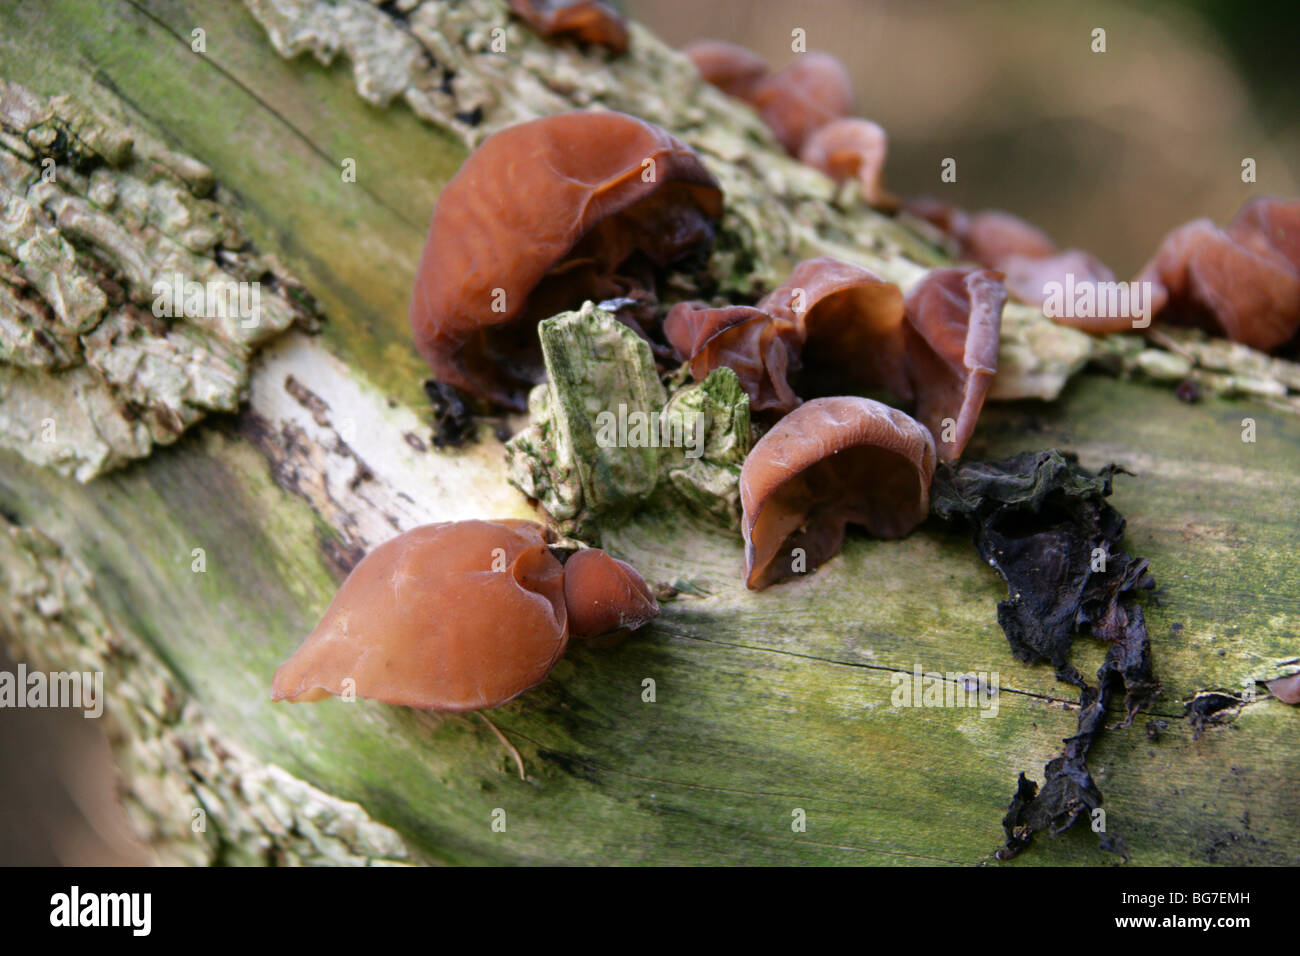 Jew's Ear Fungus, Hirneola auricula-judae (Auricularia auricula-judae), Auriculariaceae Growing on Dead Elder Tree Stock Photo